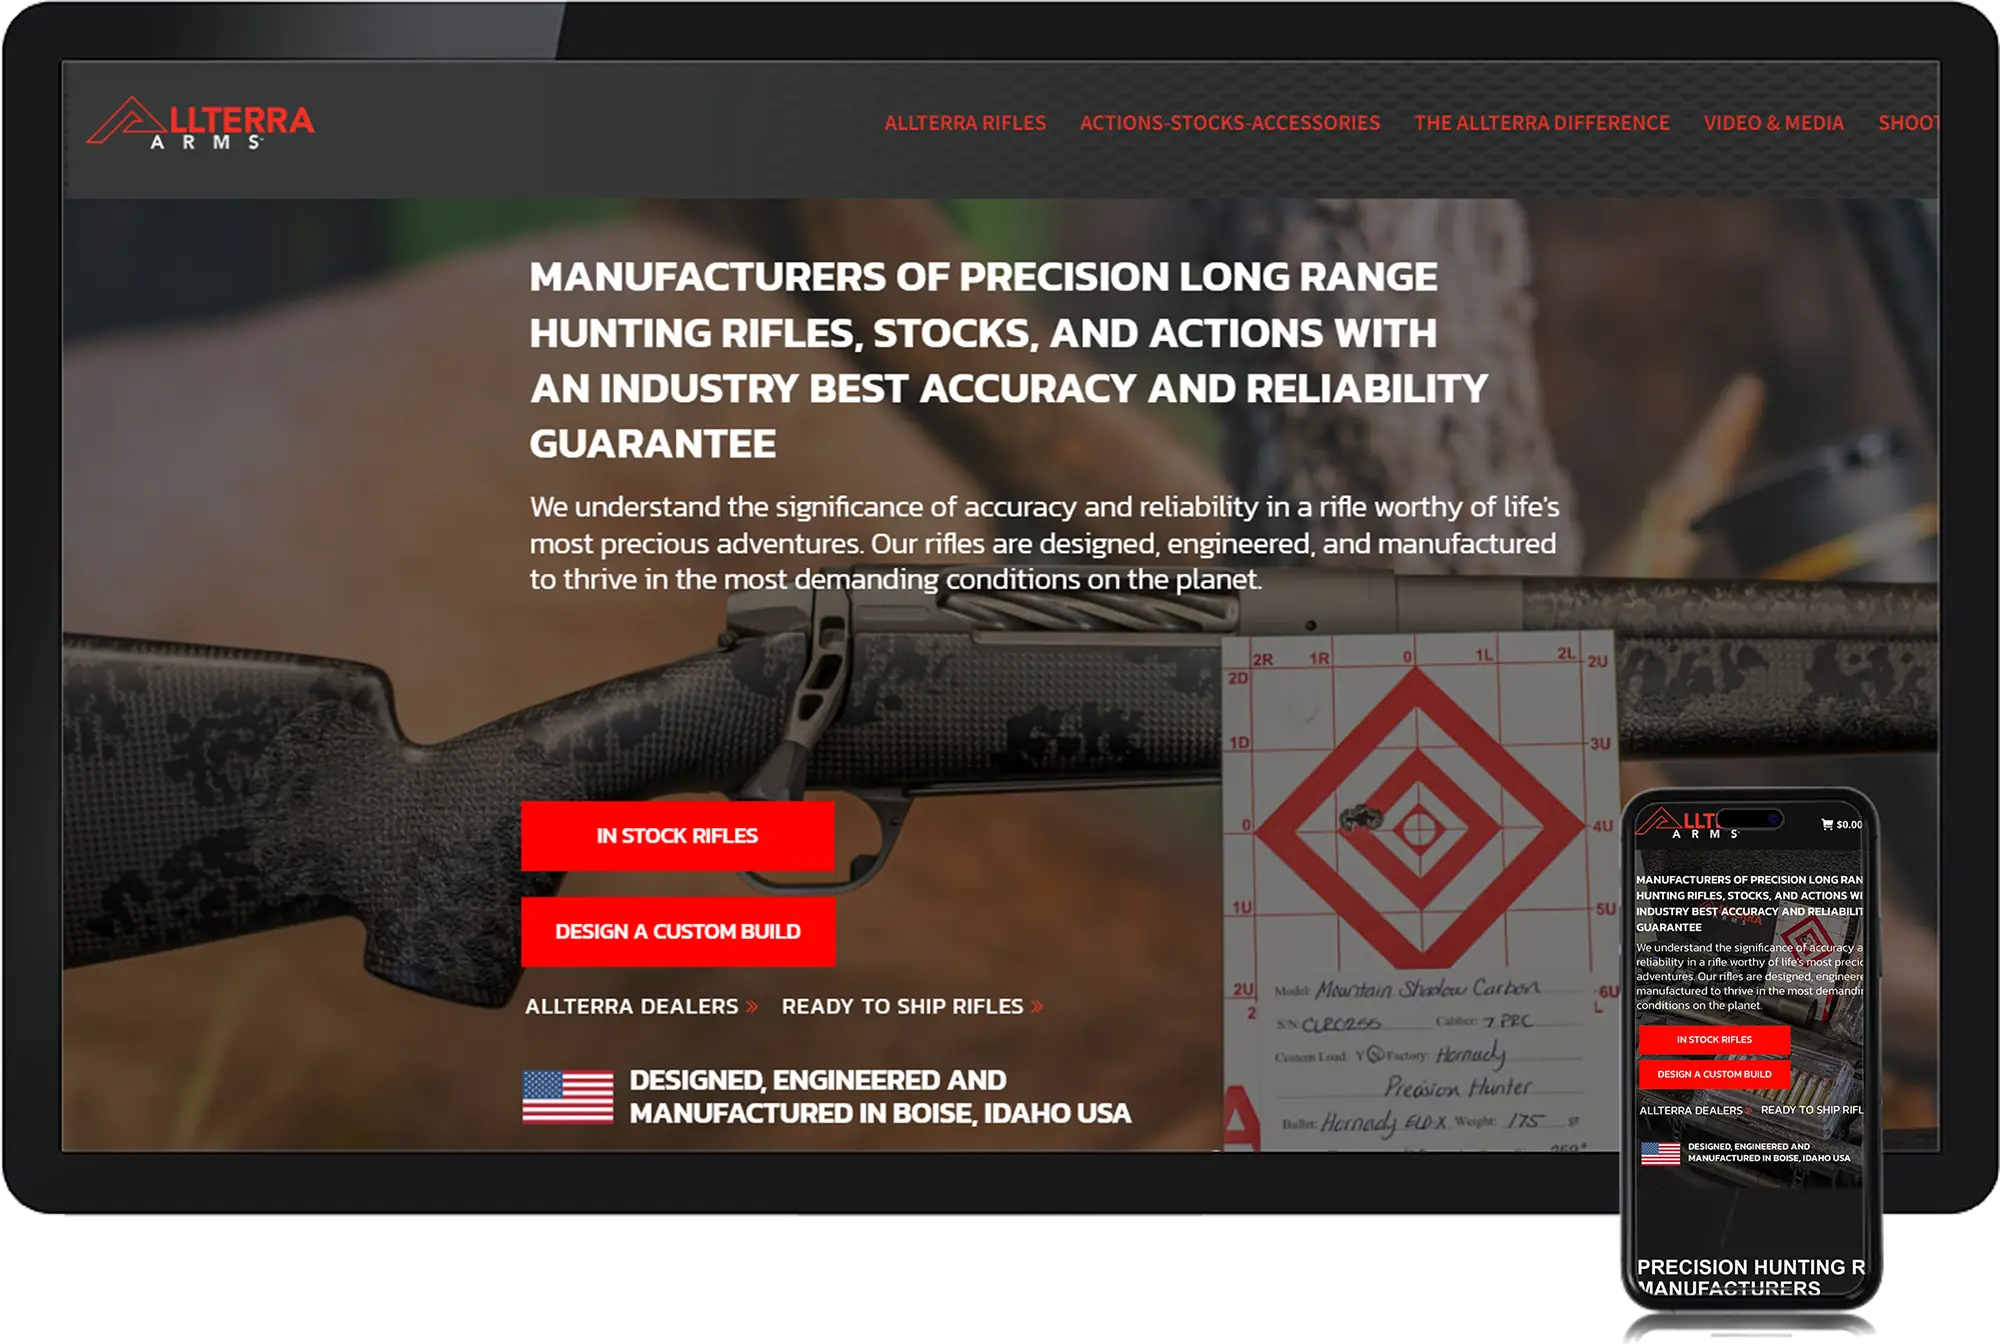 long range hunting rifles manufactured in Boise Idaho